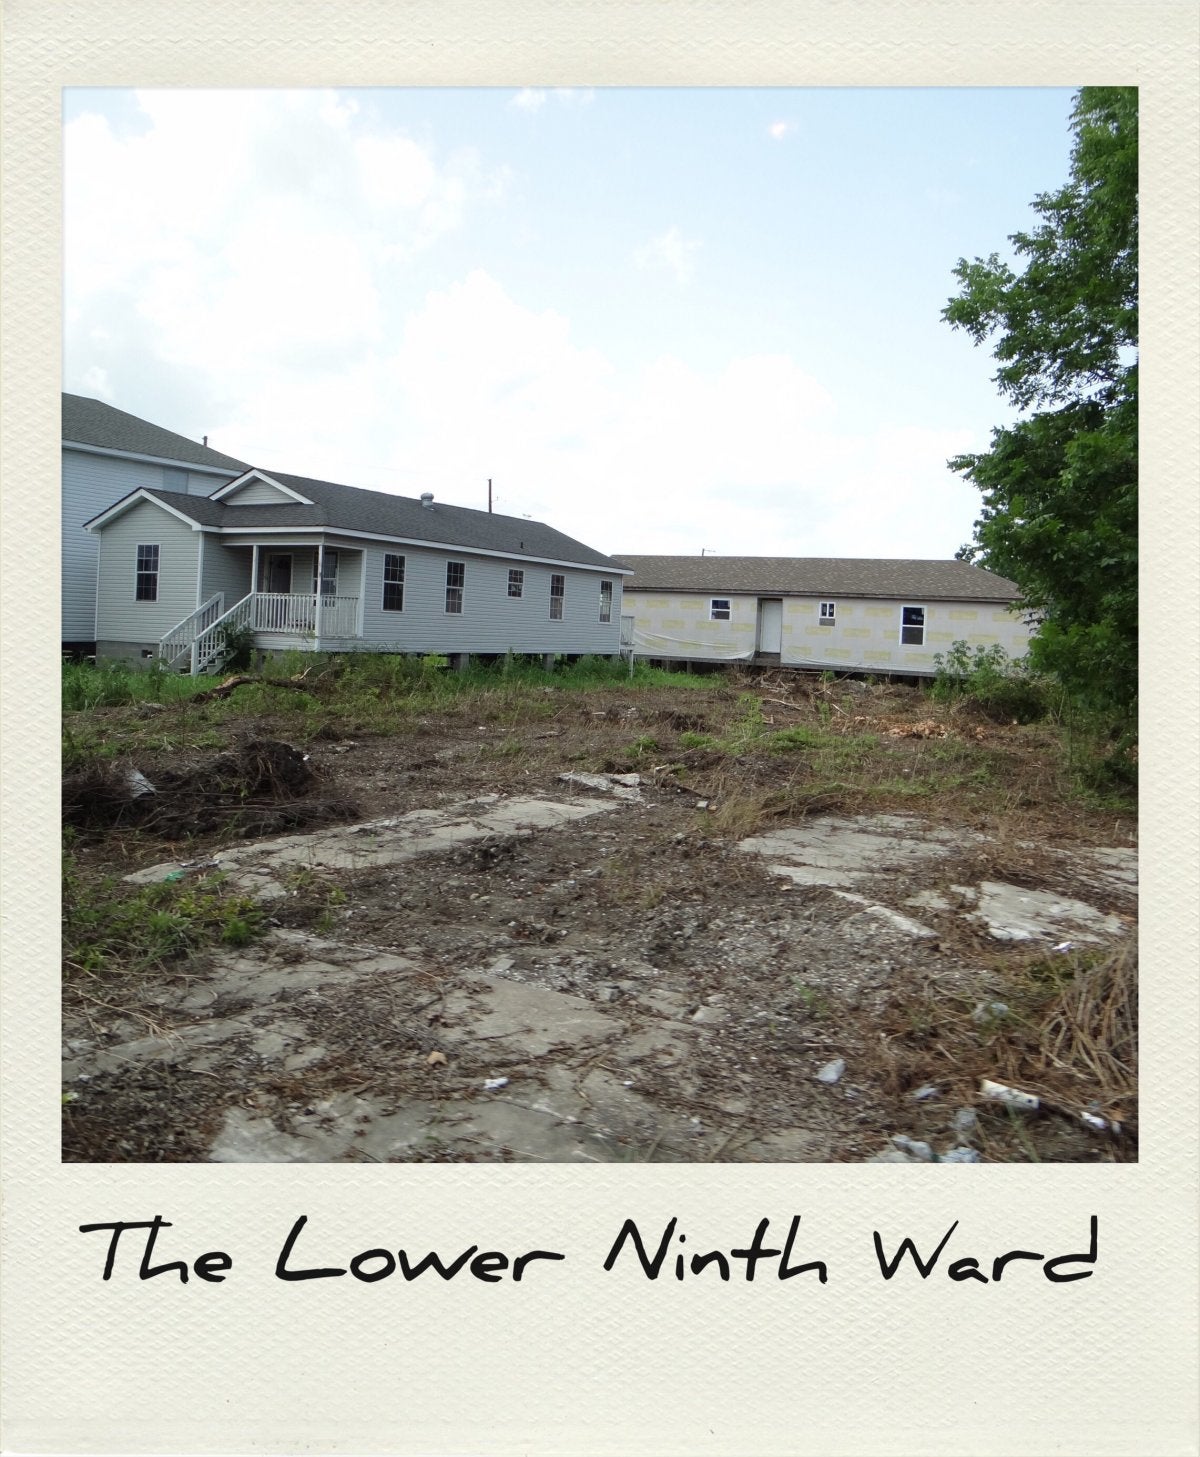 The Lower Ninth Ward